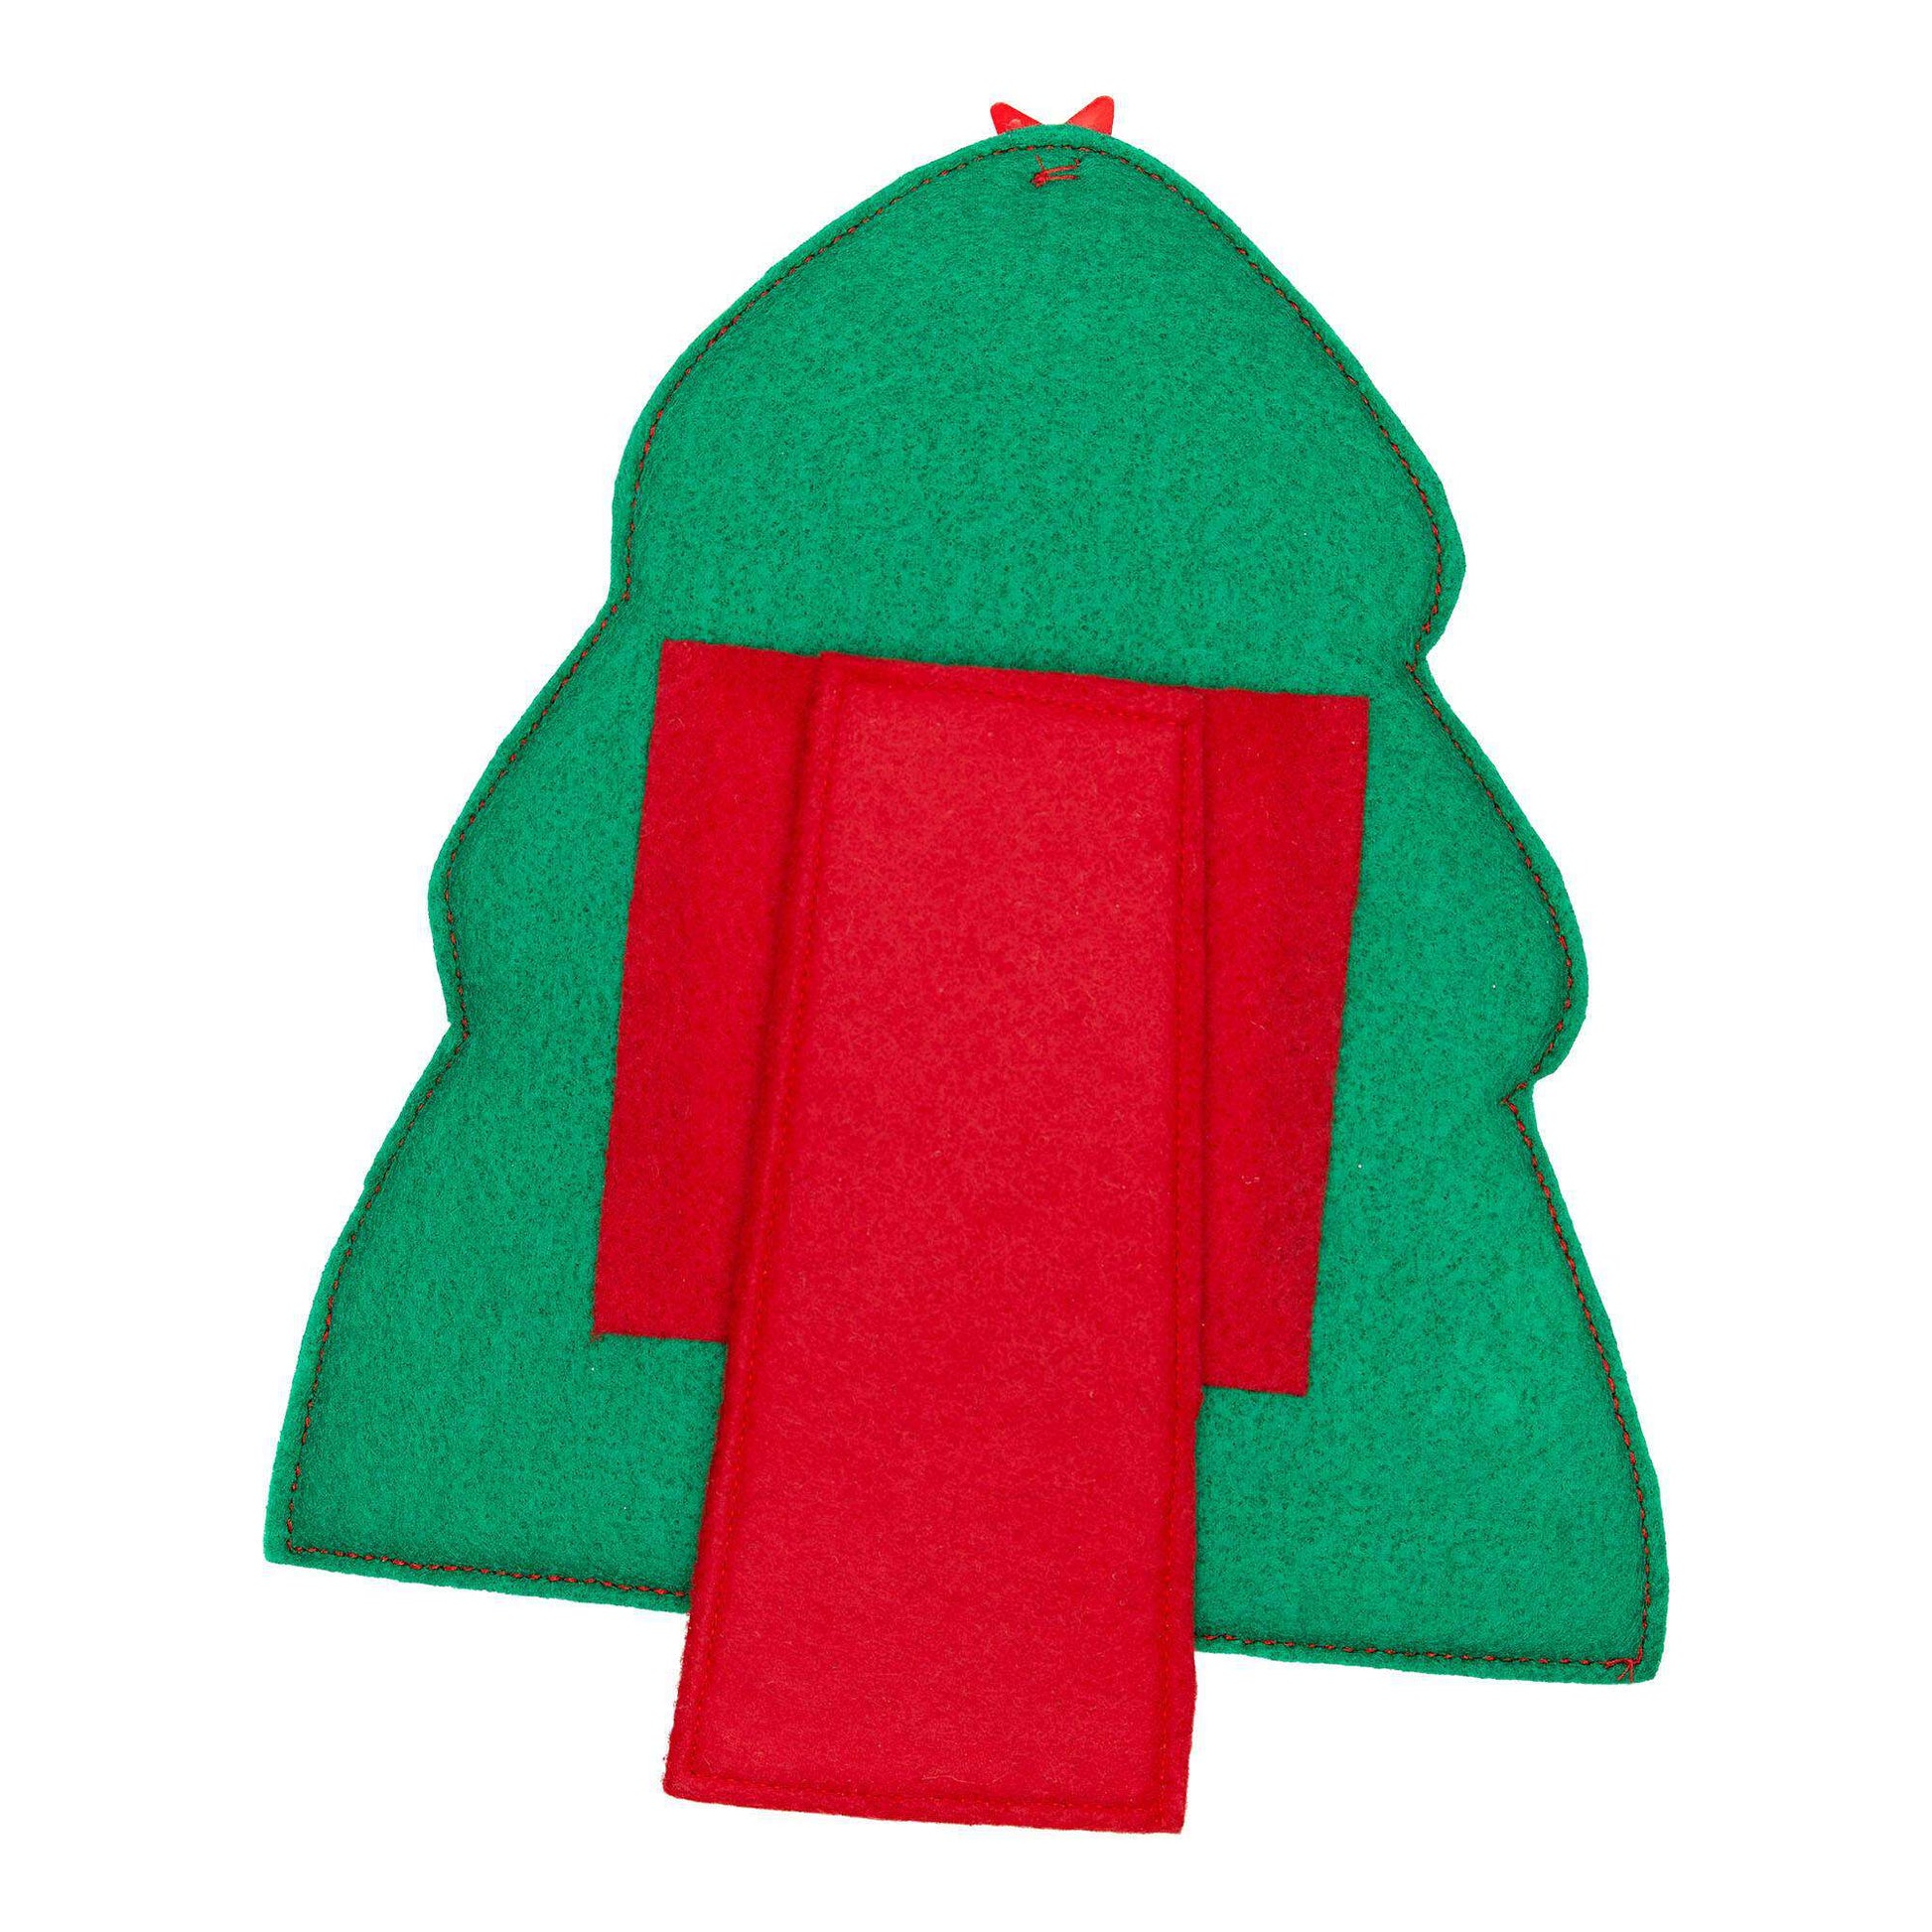 Free Coats & Clark Sewing Christmas Tree Photo Frame Pattern